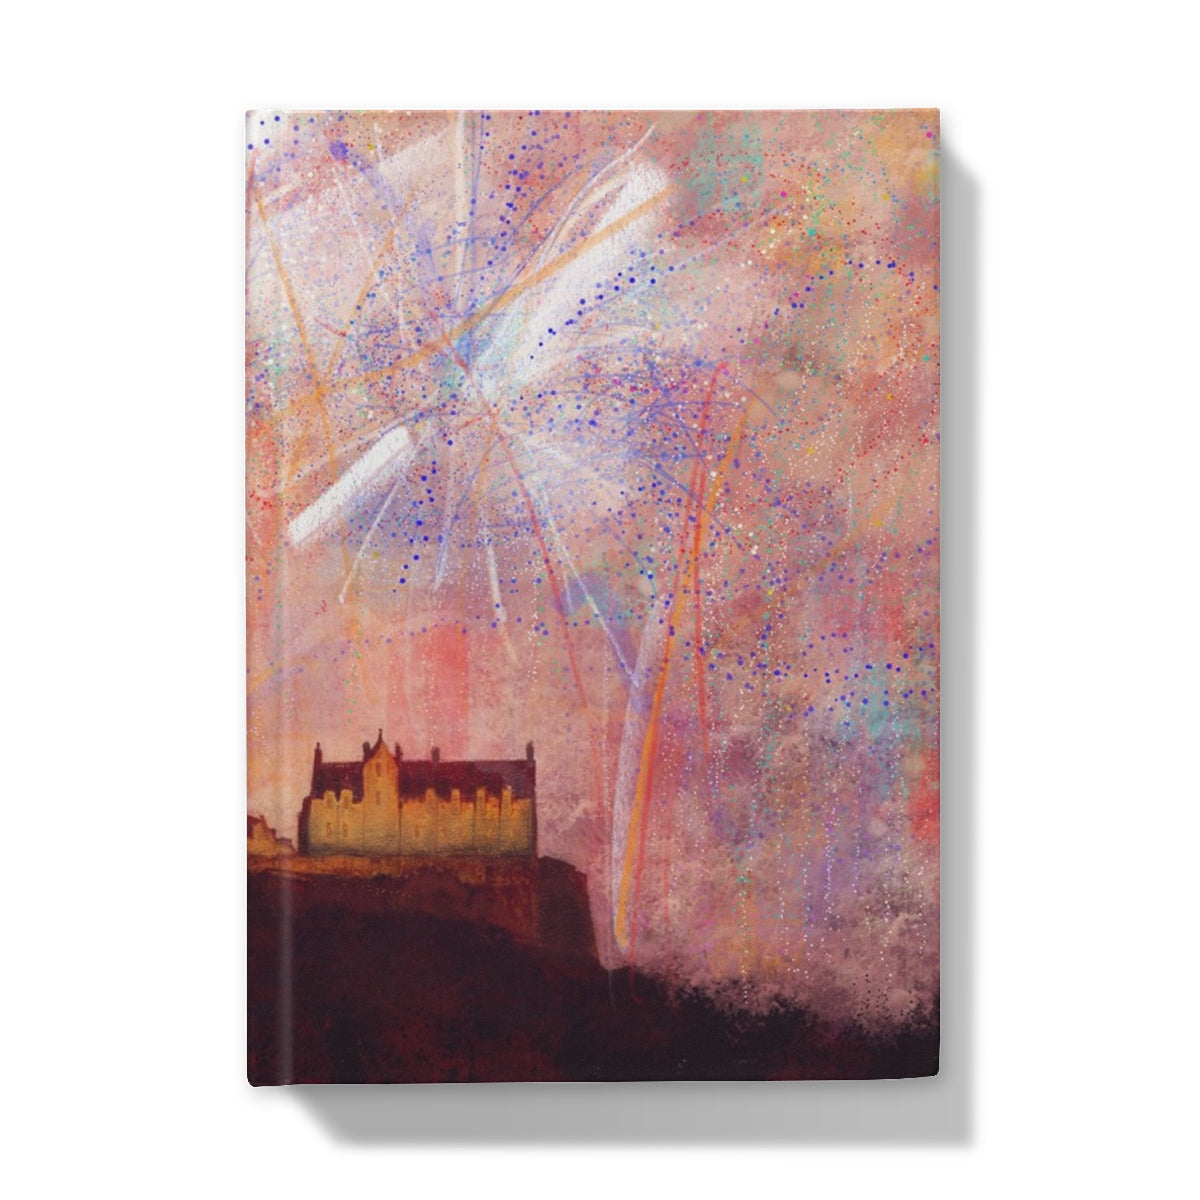 Edinburgh Castle Fireworks Art Gifts Hardback Journal-Journals & Notebooks-Edinburgh & Glasgow Art Gallery-5"x7"-Lined-Paintings, Prints, Homeware, Art Gifts From Scotland By Scottish Artist Kevin Hunter